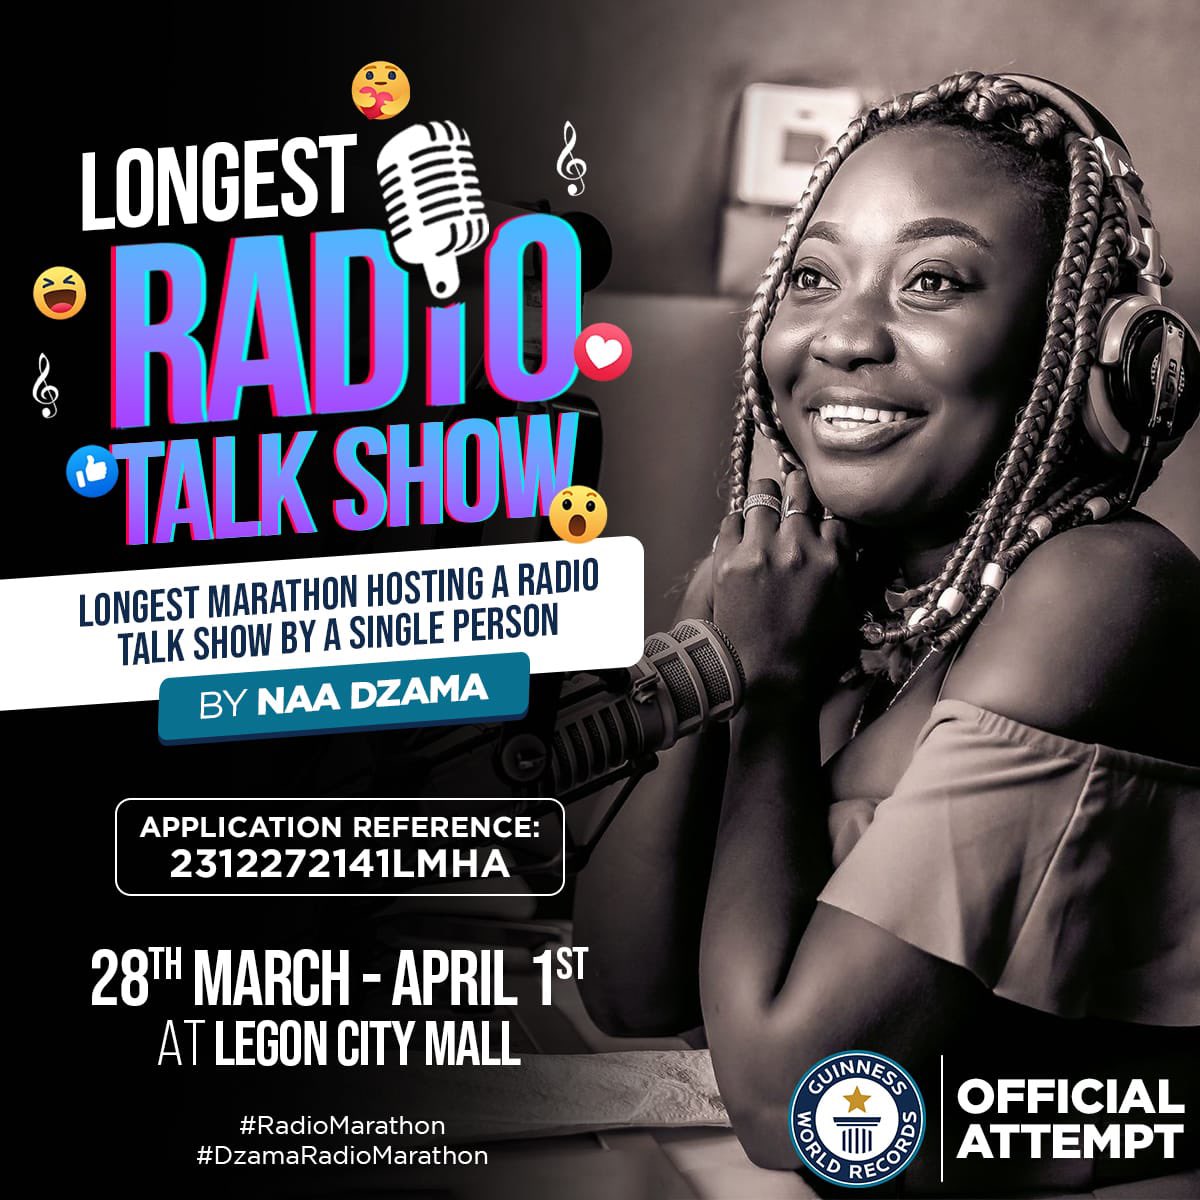 Join us live on GNA online radio  link ;bit.ly/dzamaradio to witness a record breaking talk show. 

#DzamaRadioMarathon